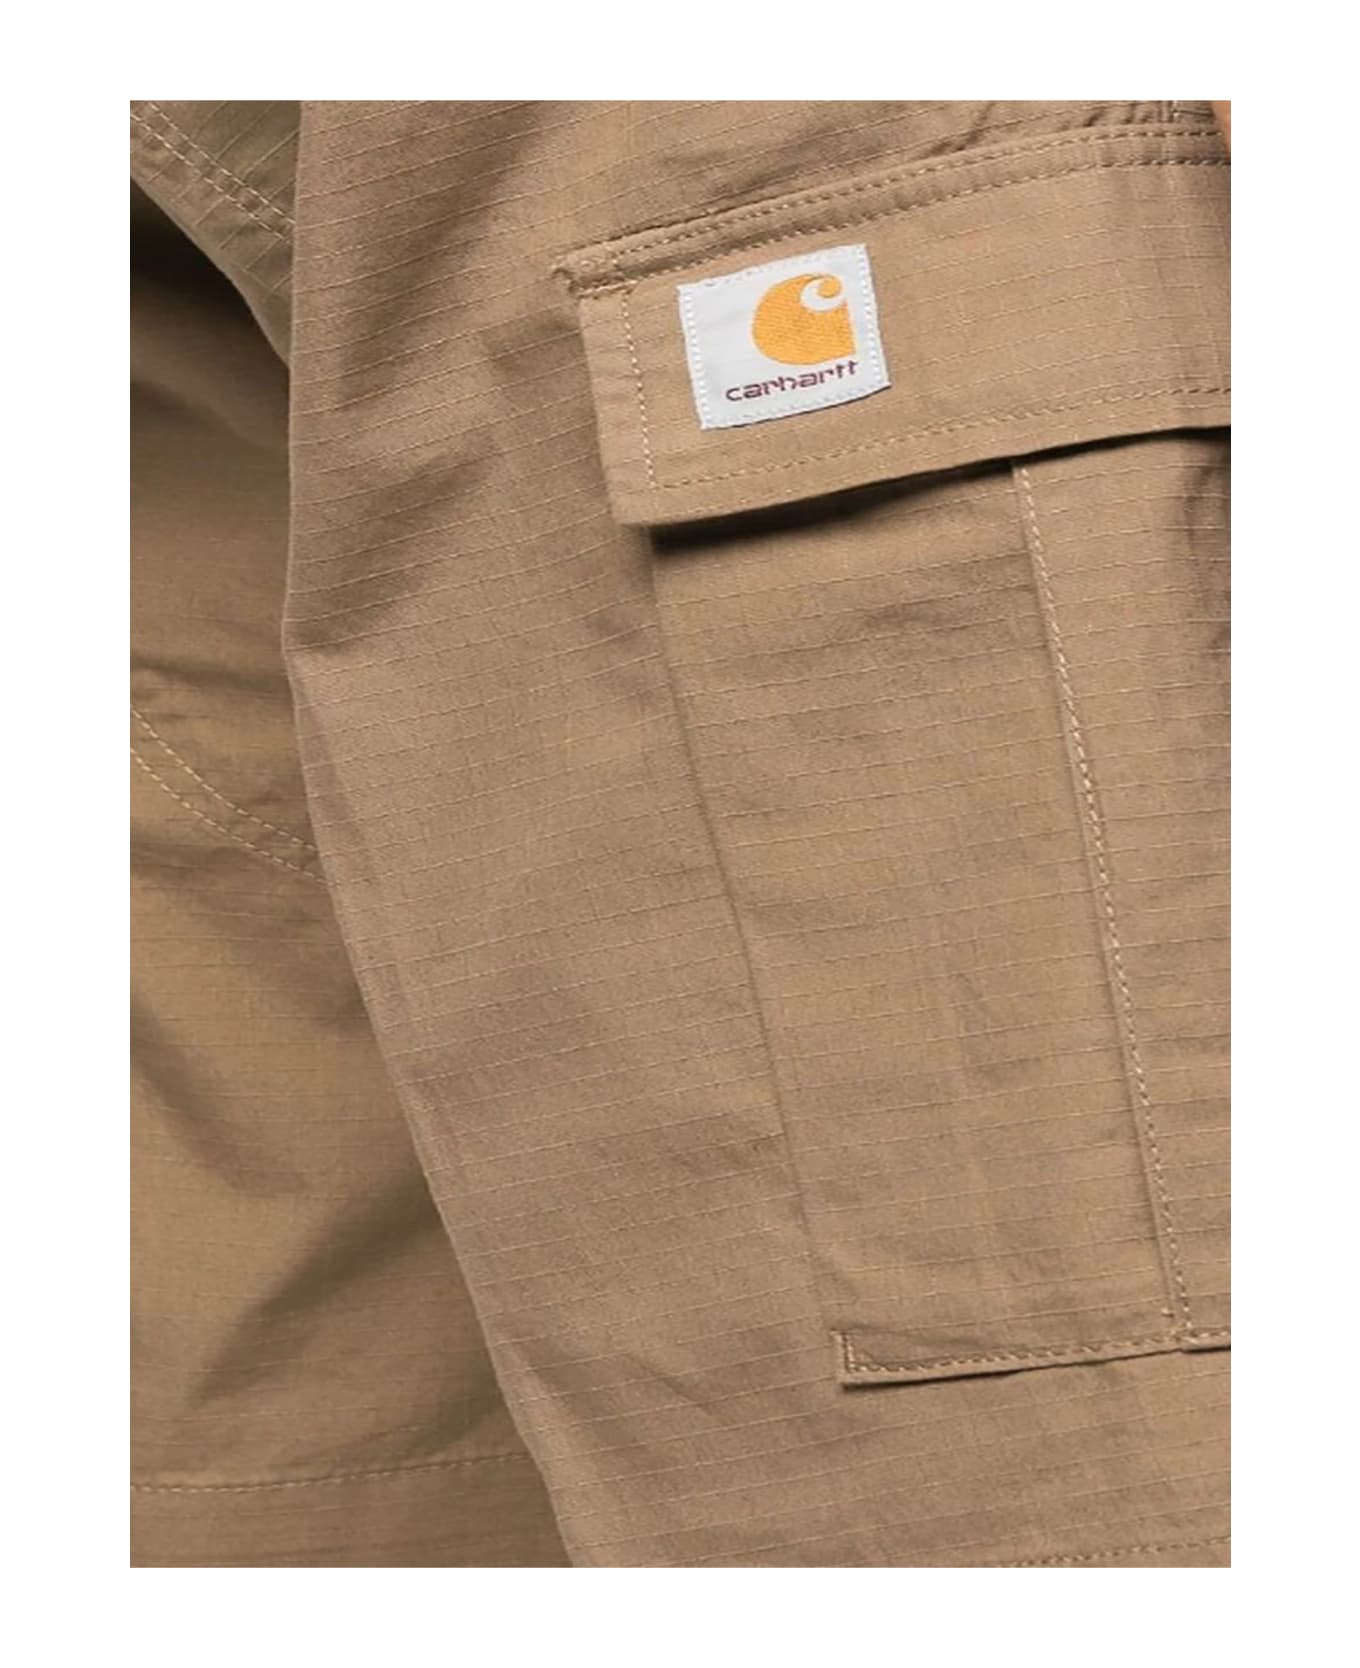 Carhartt Light Brown Cotton Cargo Shorts - Neutro